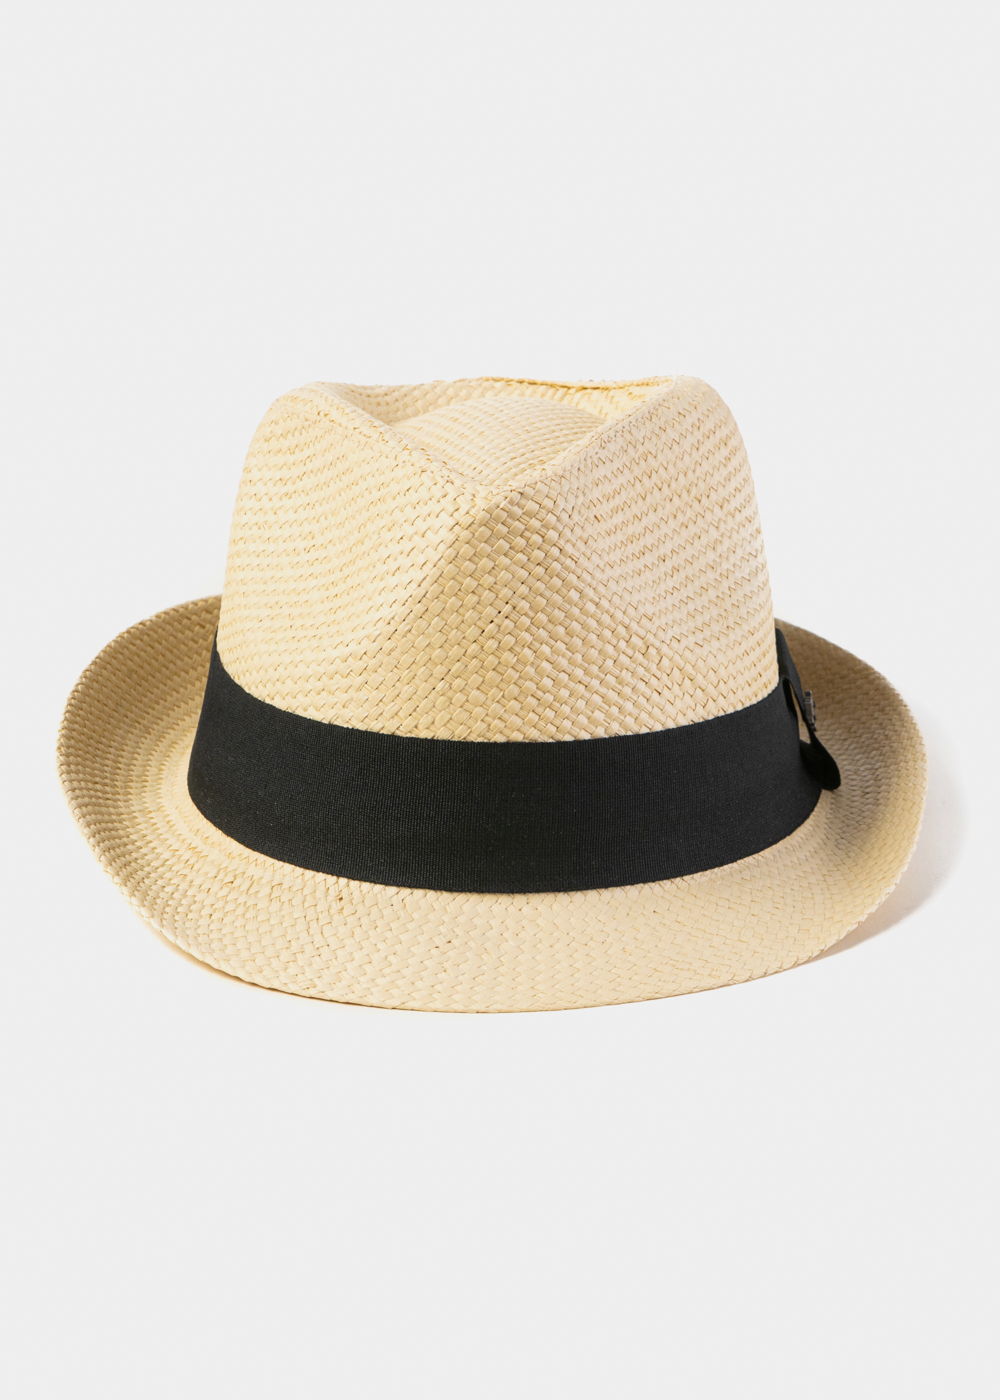 Beige Fedora Hat w/ black hatband 2